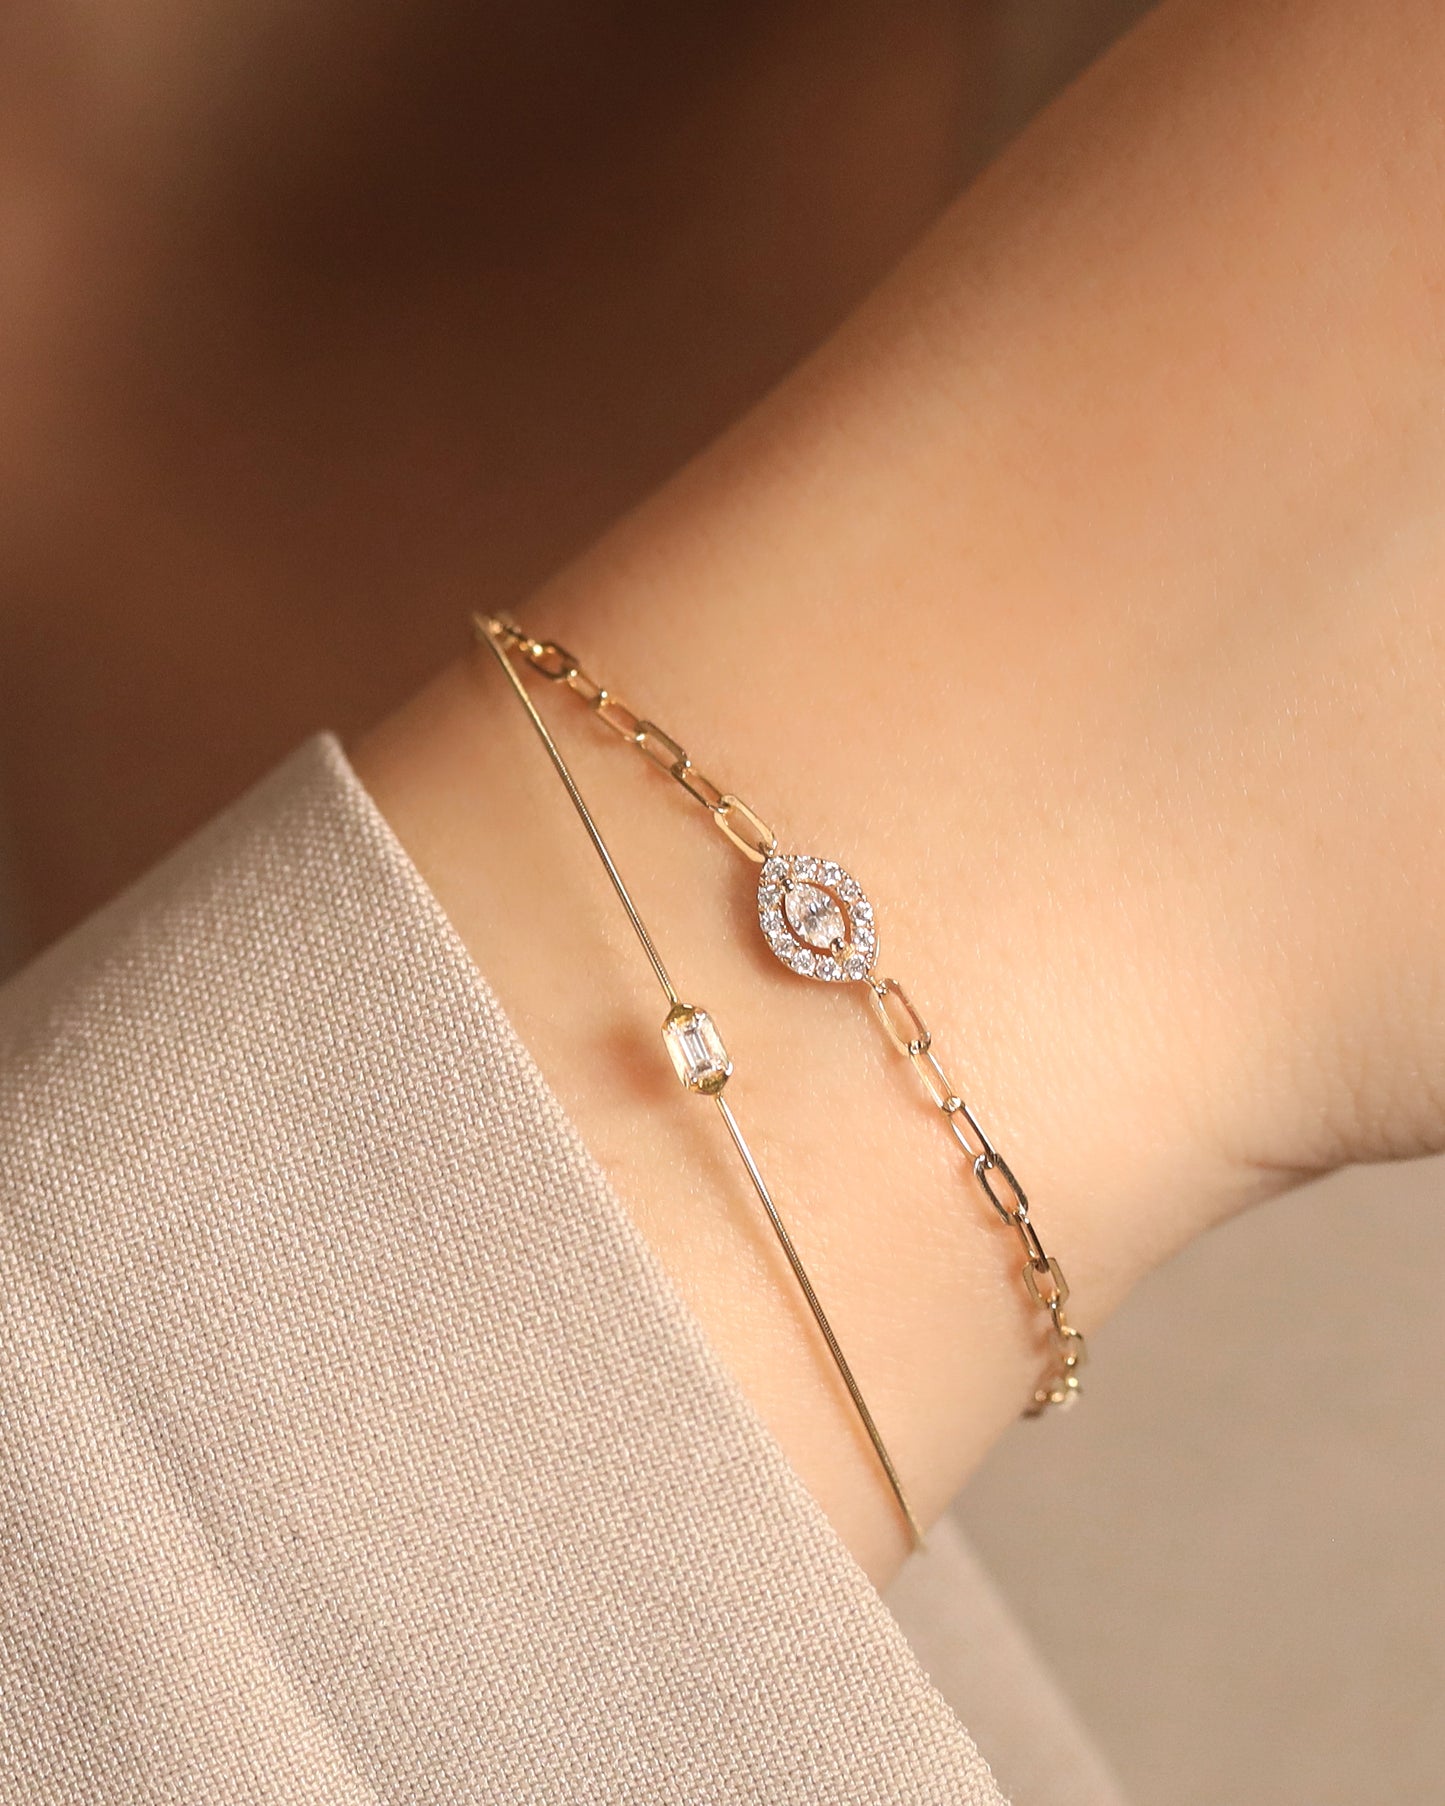 【Efforless Chic】Pink Sapphire Diamond Bracelet